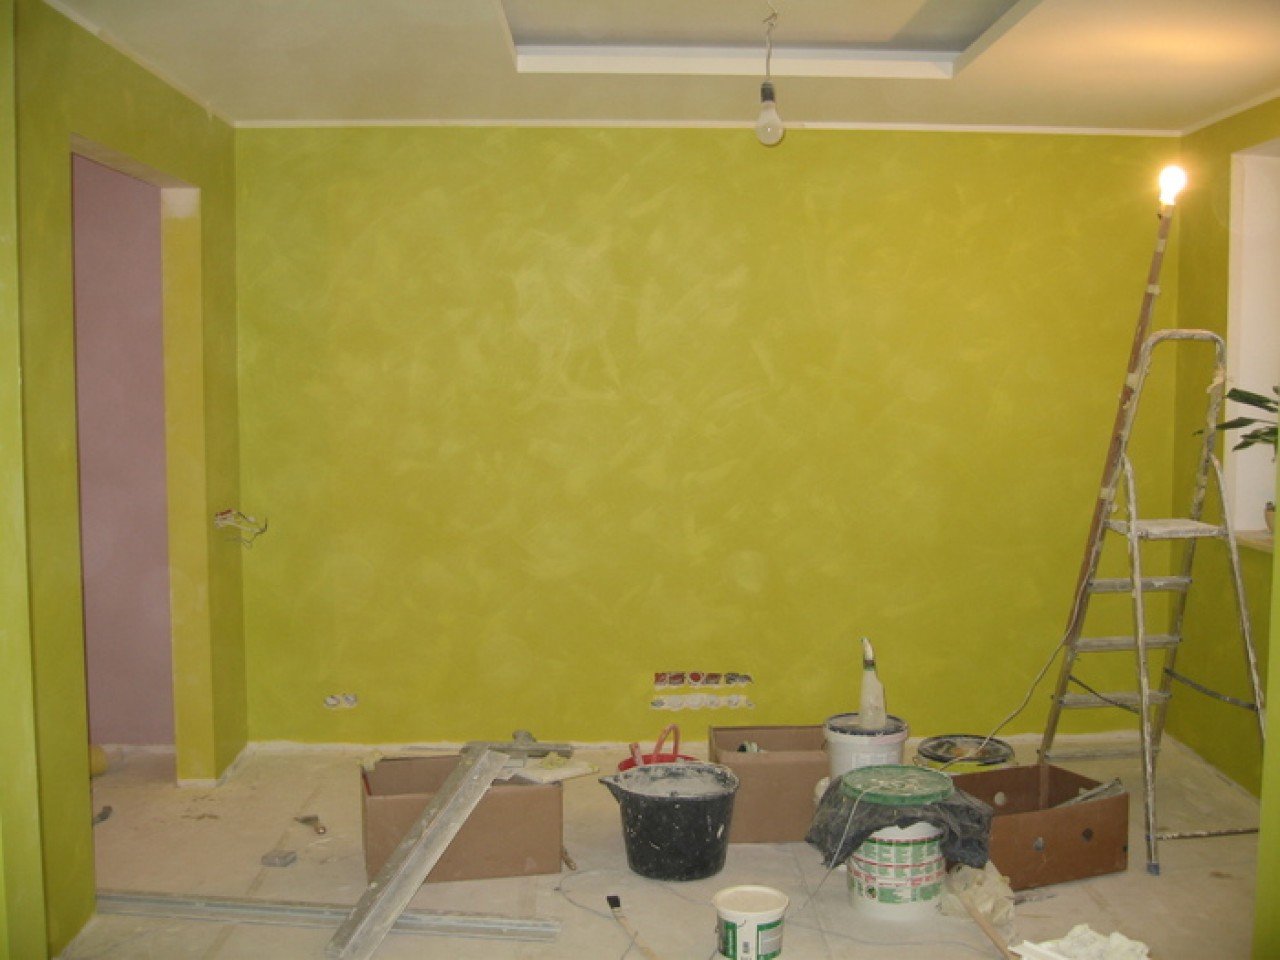 Малярные работы покраска. Покраска стен. Покрашенные стены. Покрашенные стены в квартире. Красивая краска для стен в квартире.